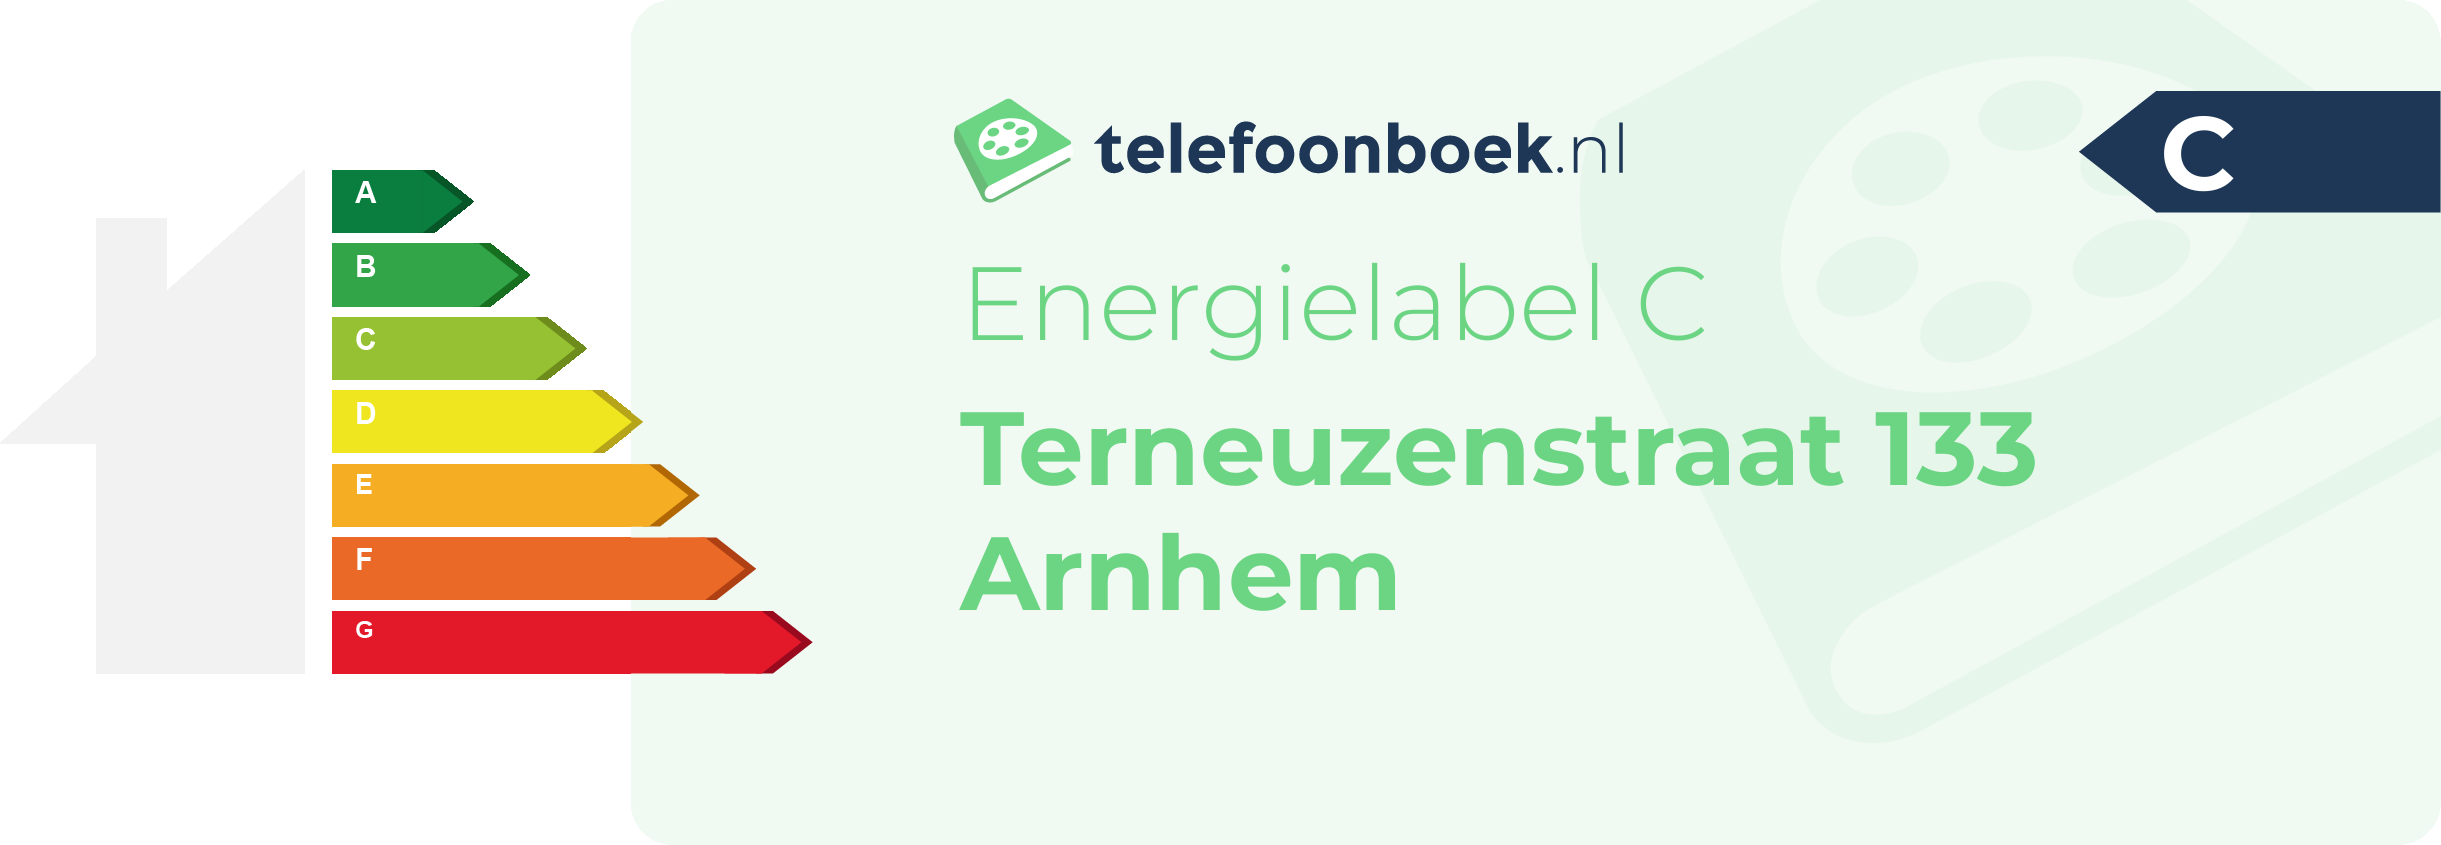 Energielabel Terneuzenstraat 133 Arnhem